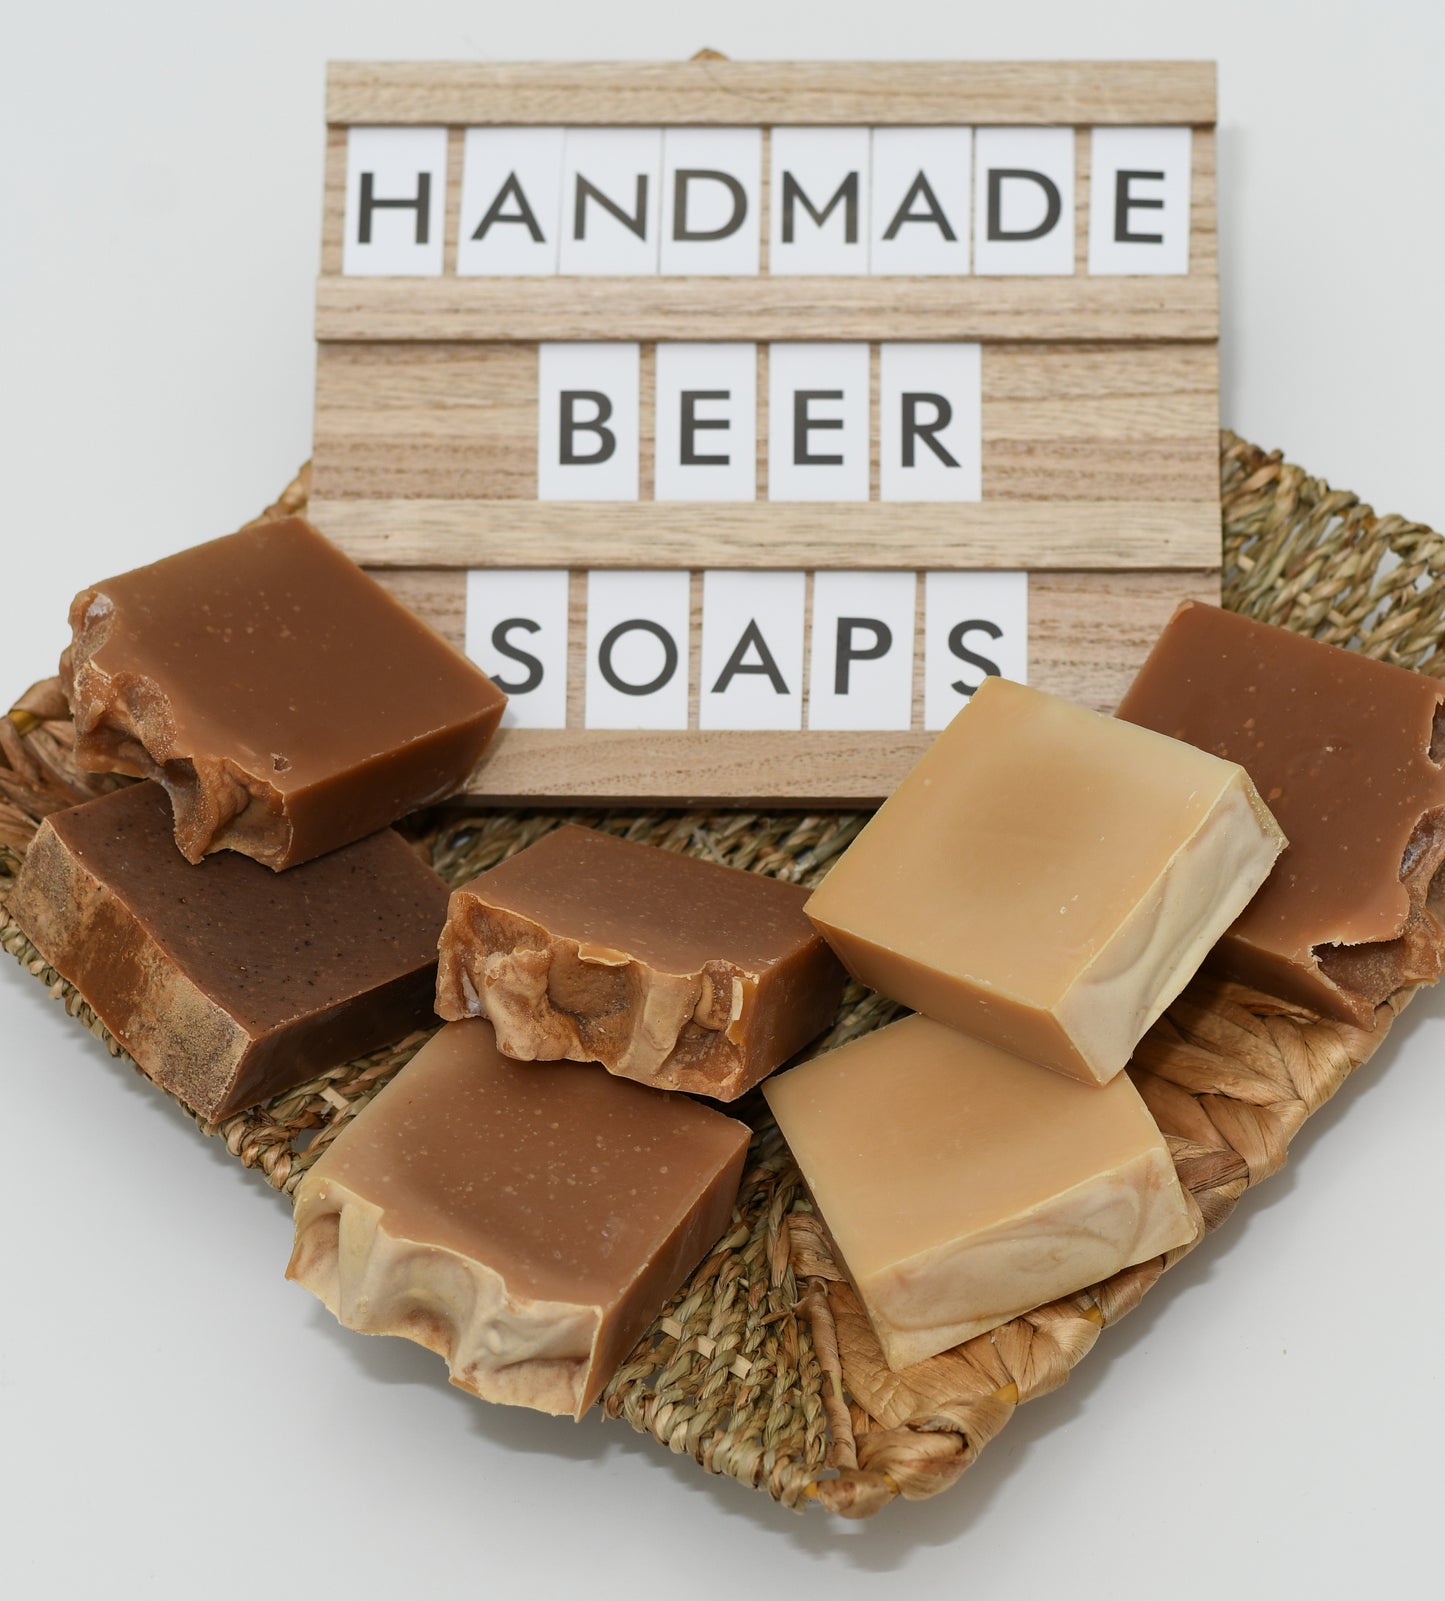 Handmade Beer Soap, Beer Soap, Natural Handmade Soaps, Cold Process Soaps